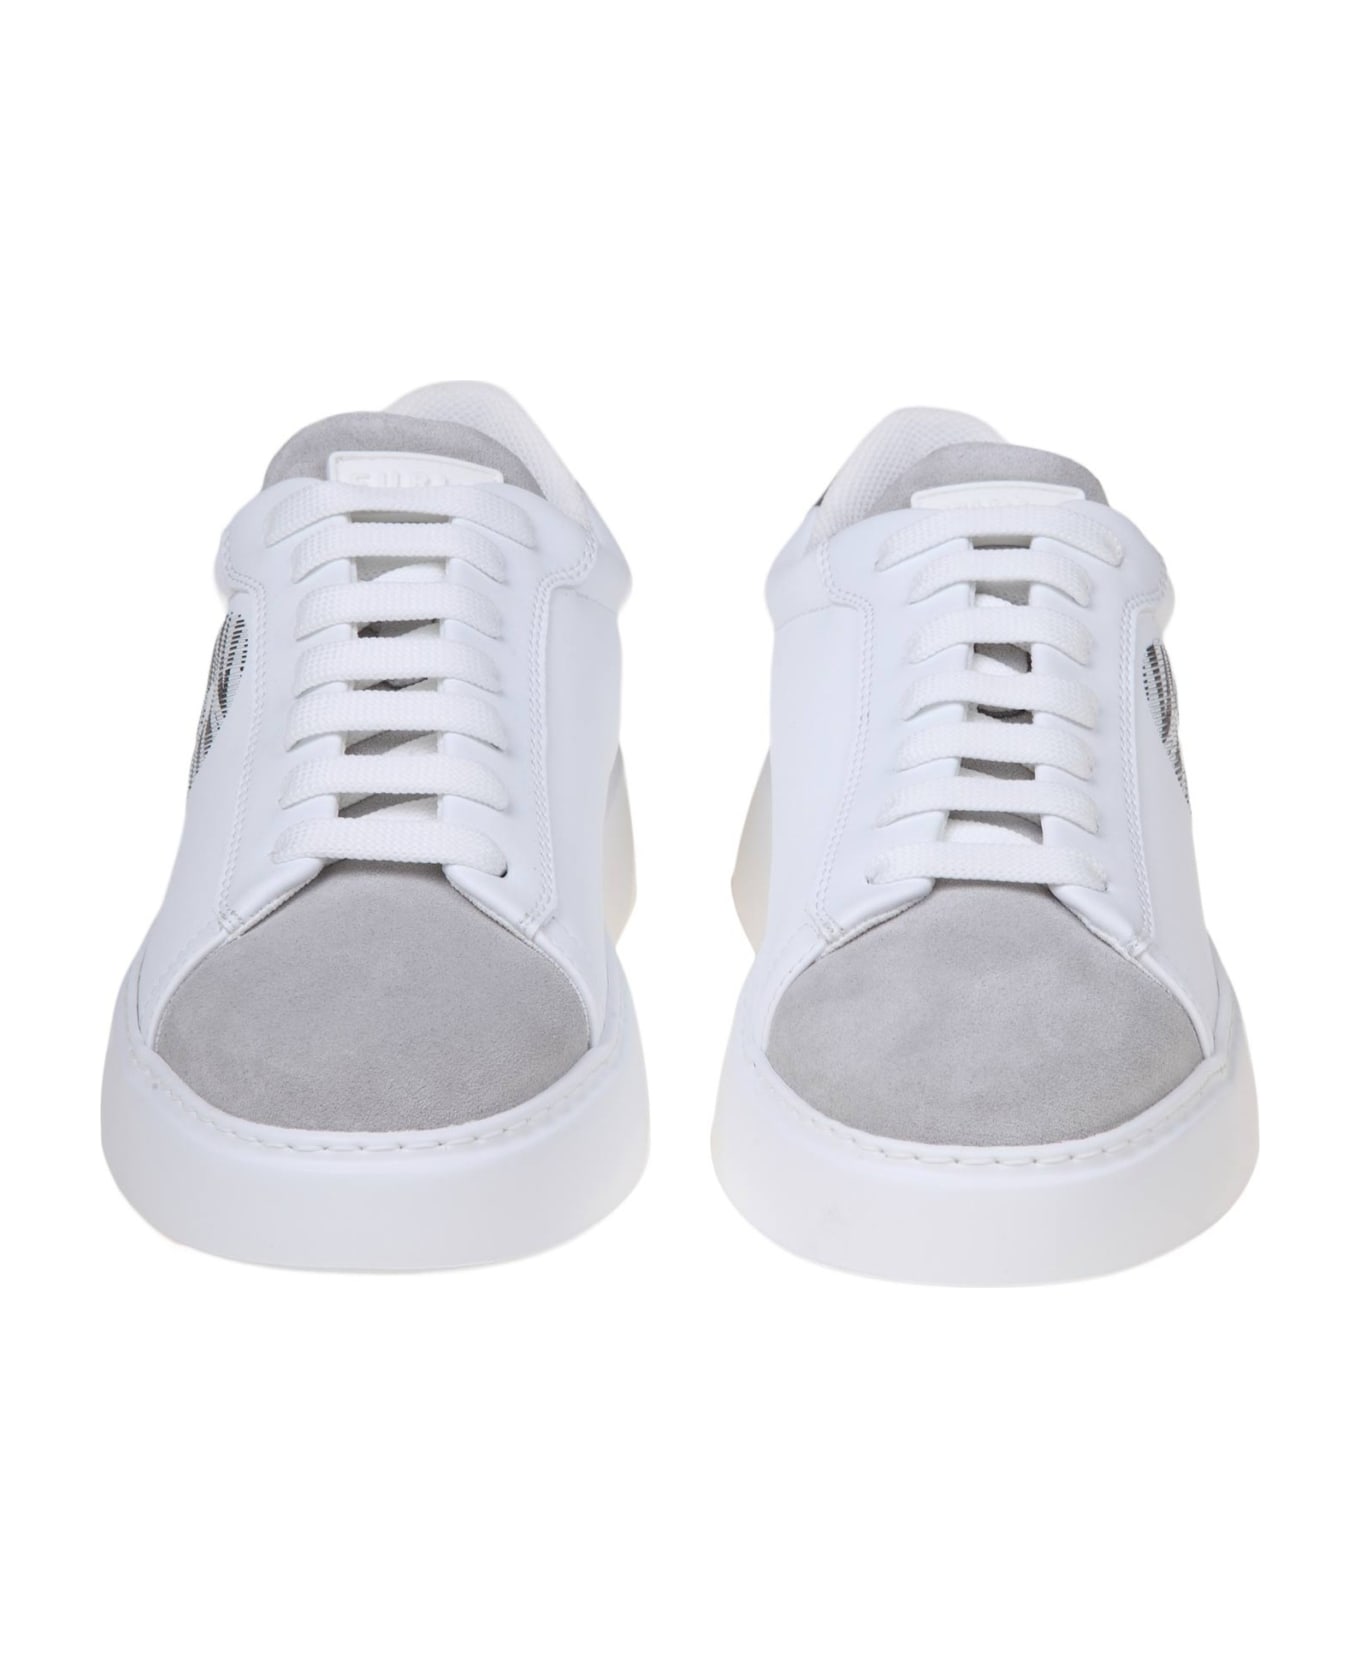 Furla Sports Sneakers In White Leather - WHITE/TALCO